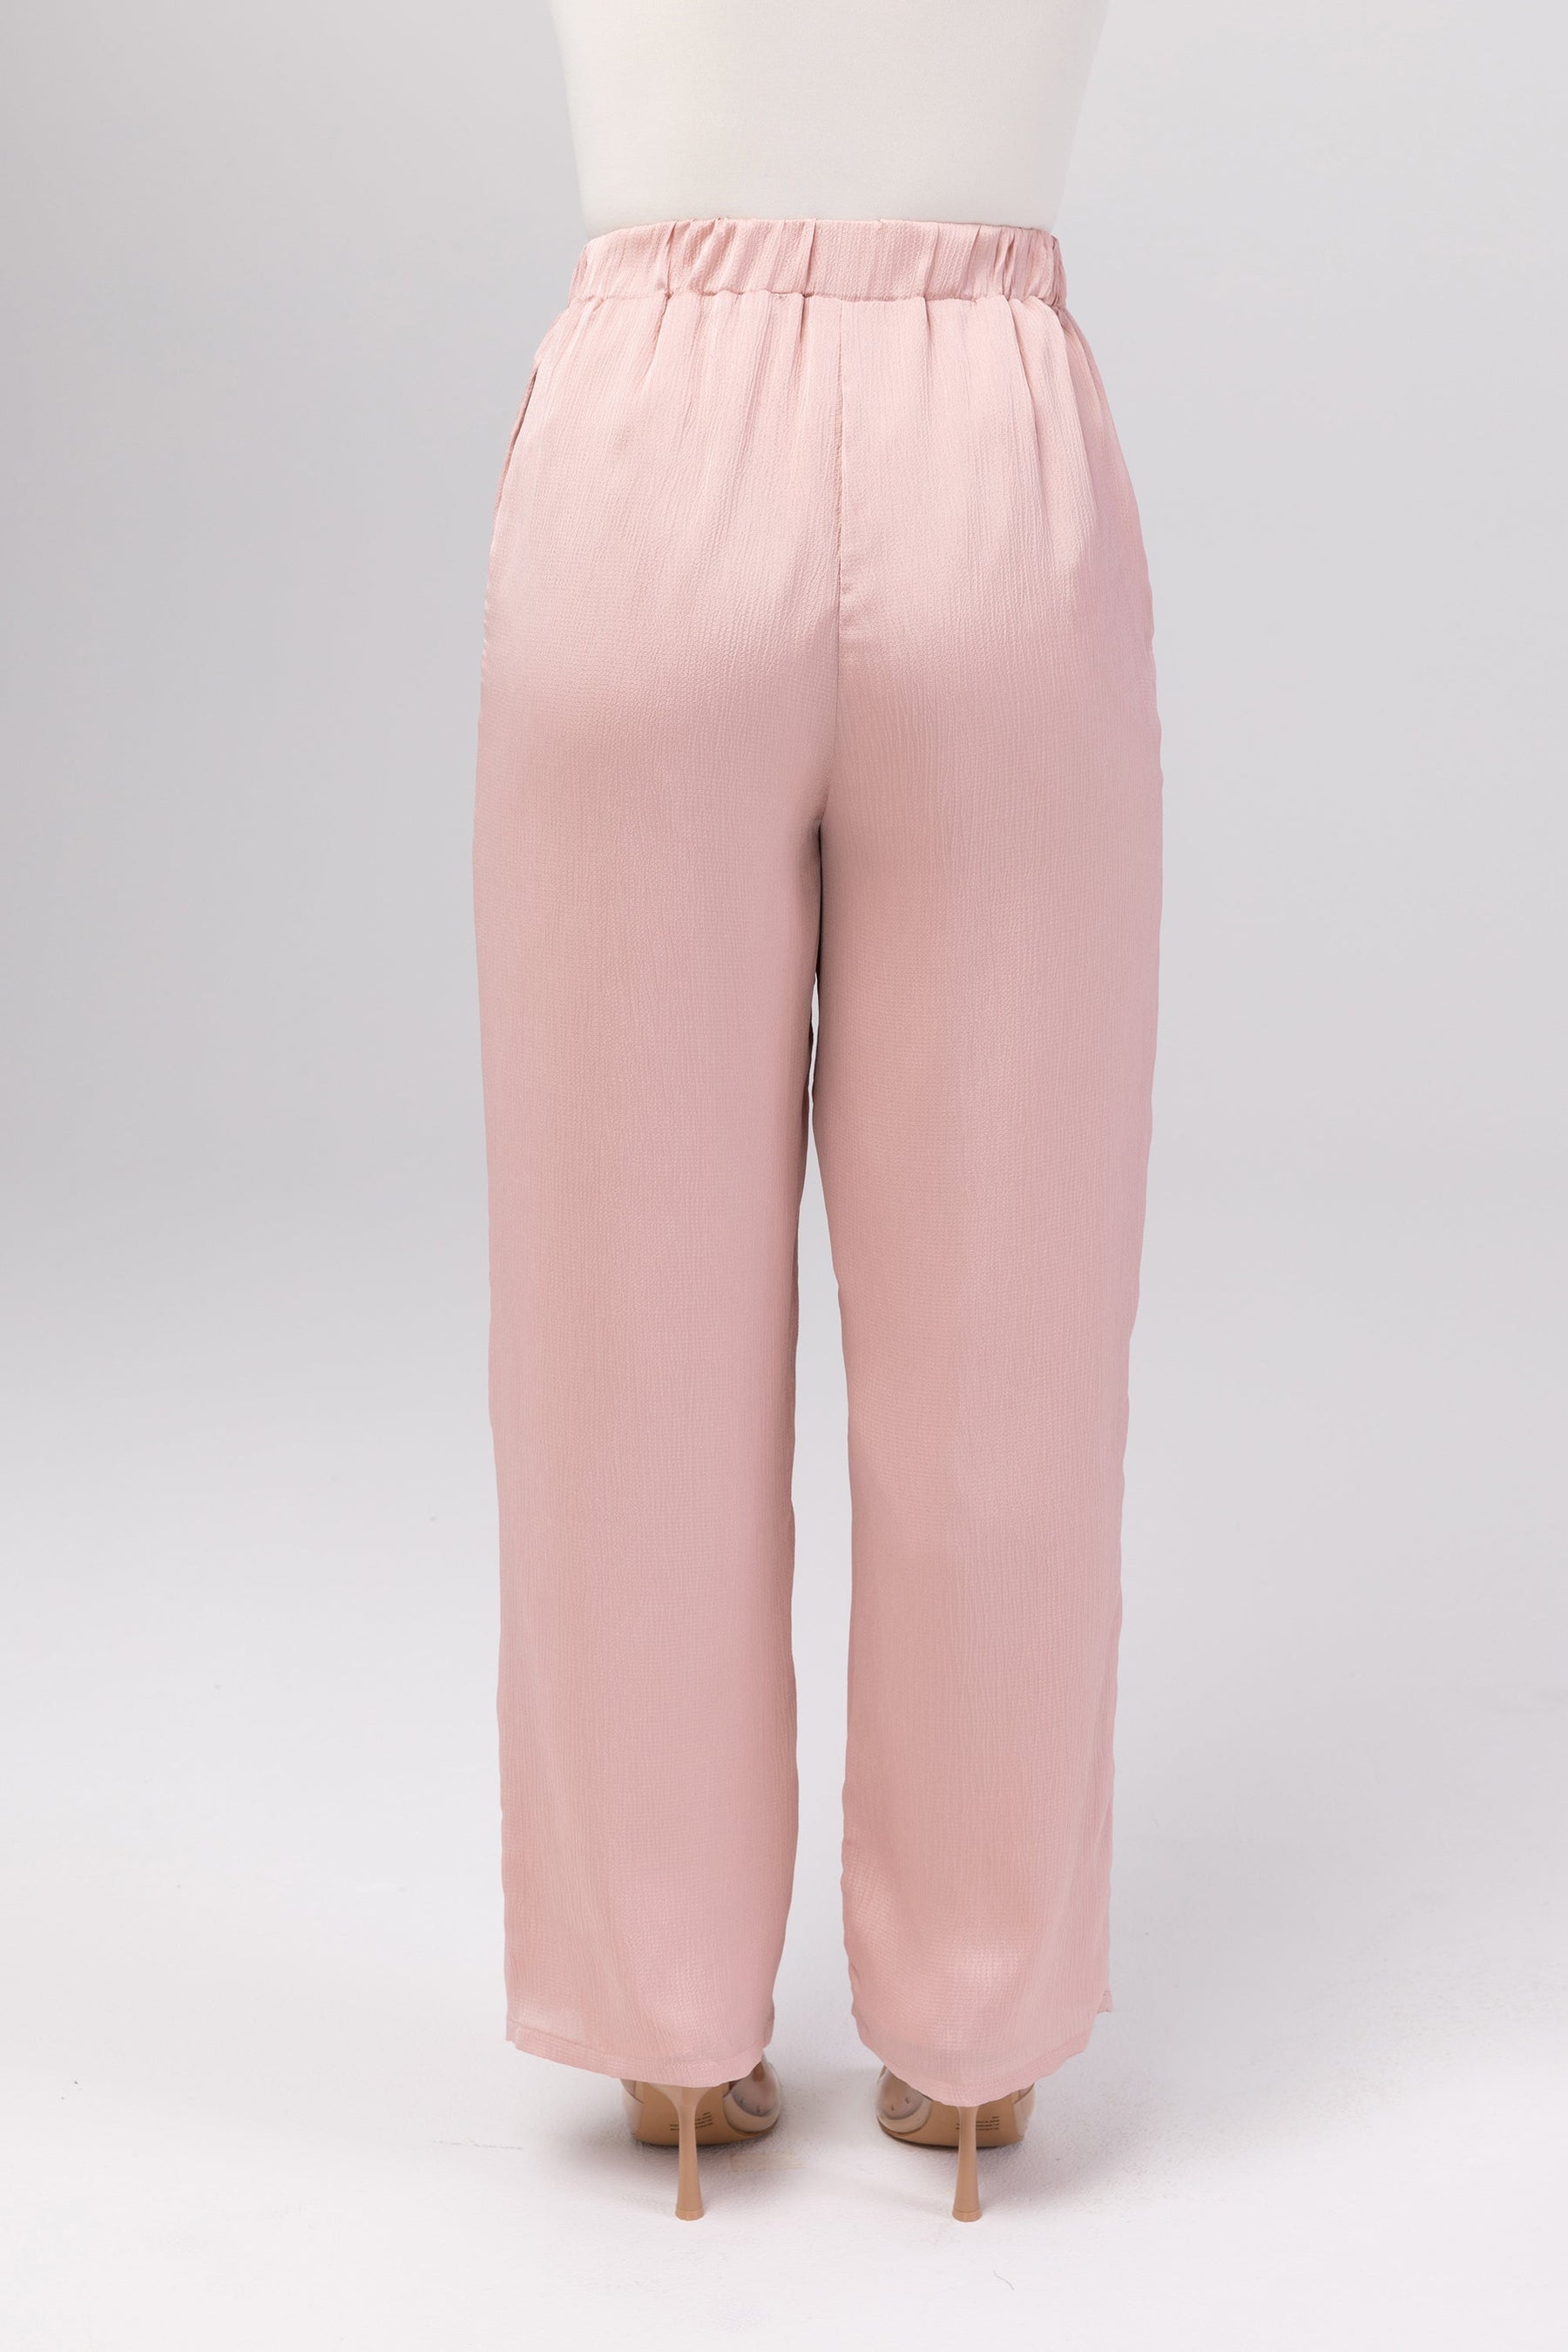 Katia Textured Wide Leg Pants - Dusty Pink Veiled 